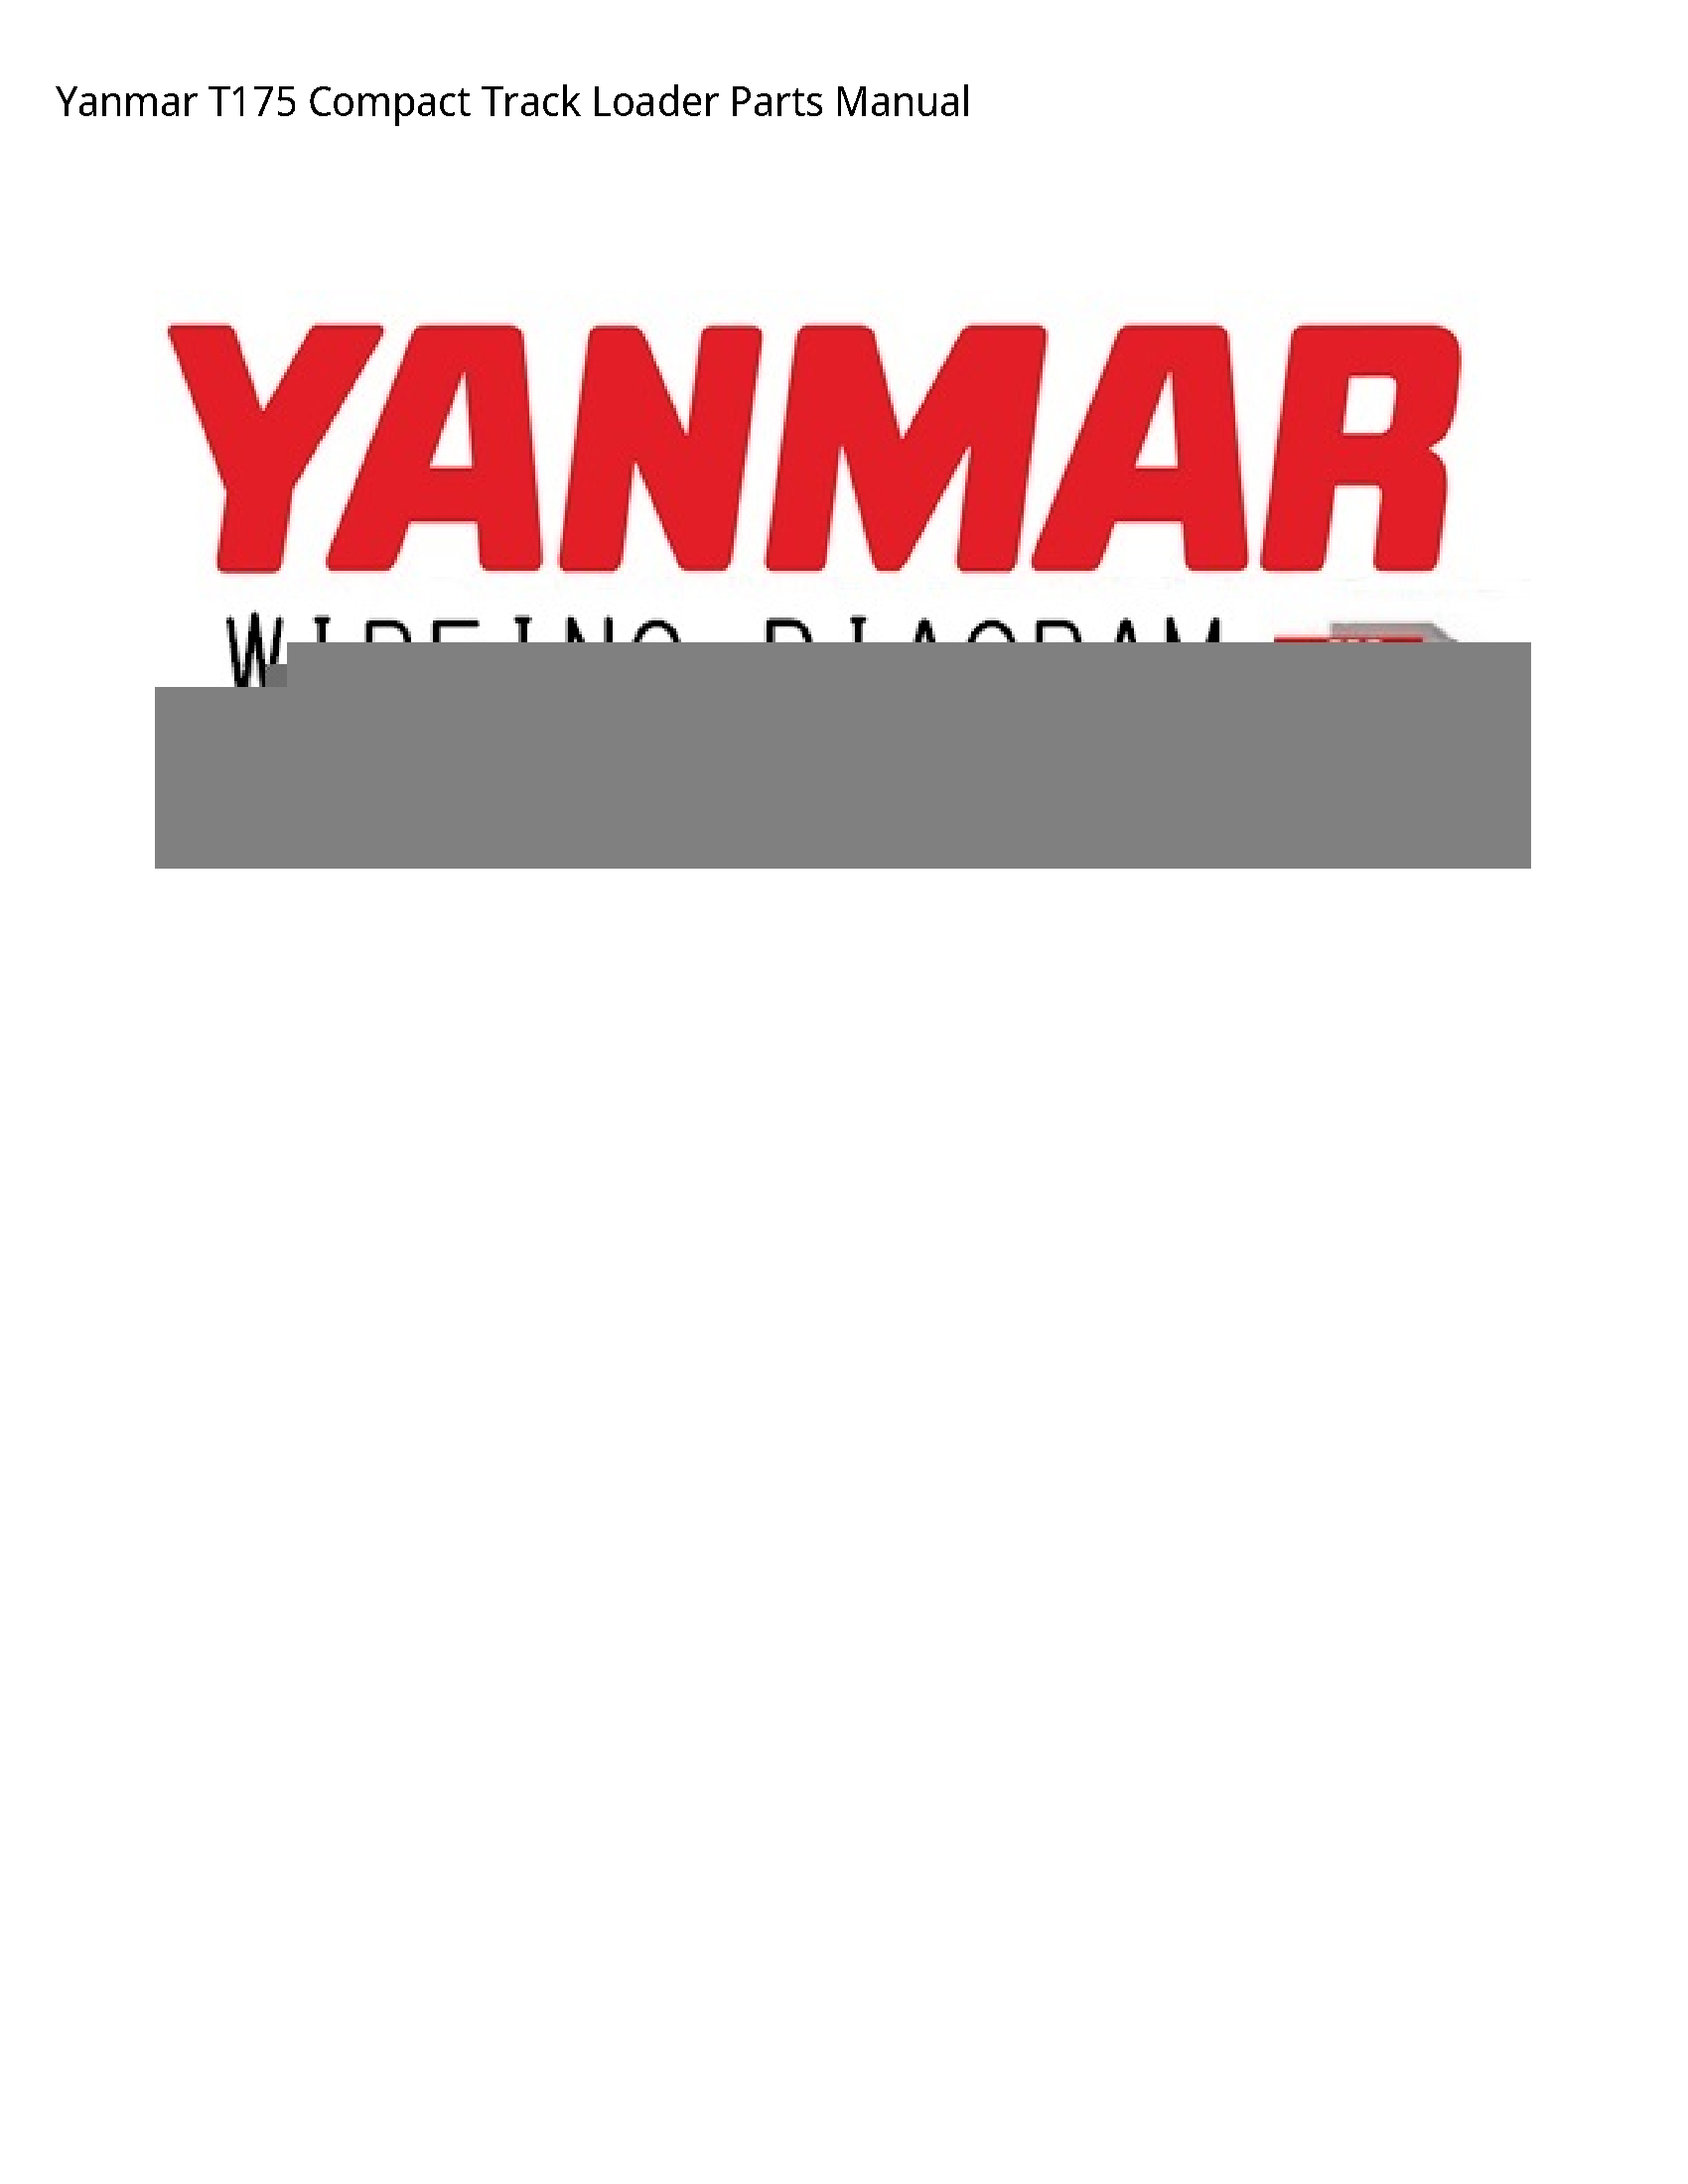 Yanmar T175 Compact Track Loader Parts manual